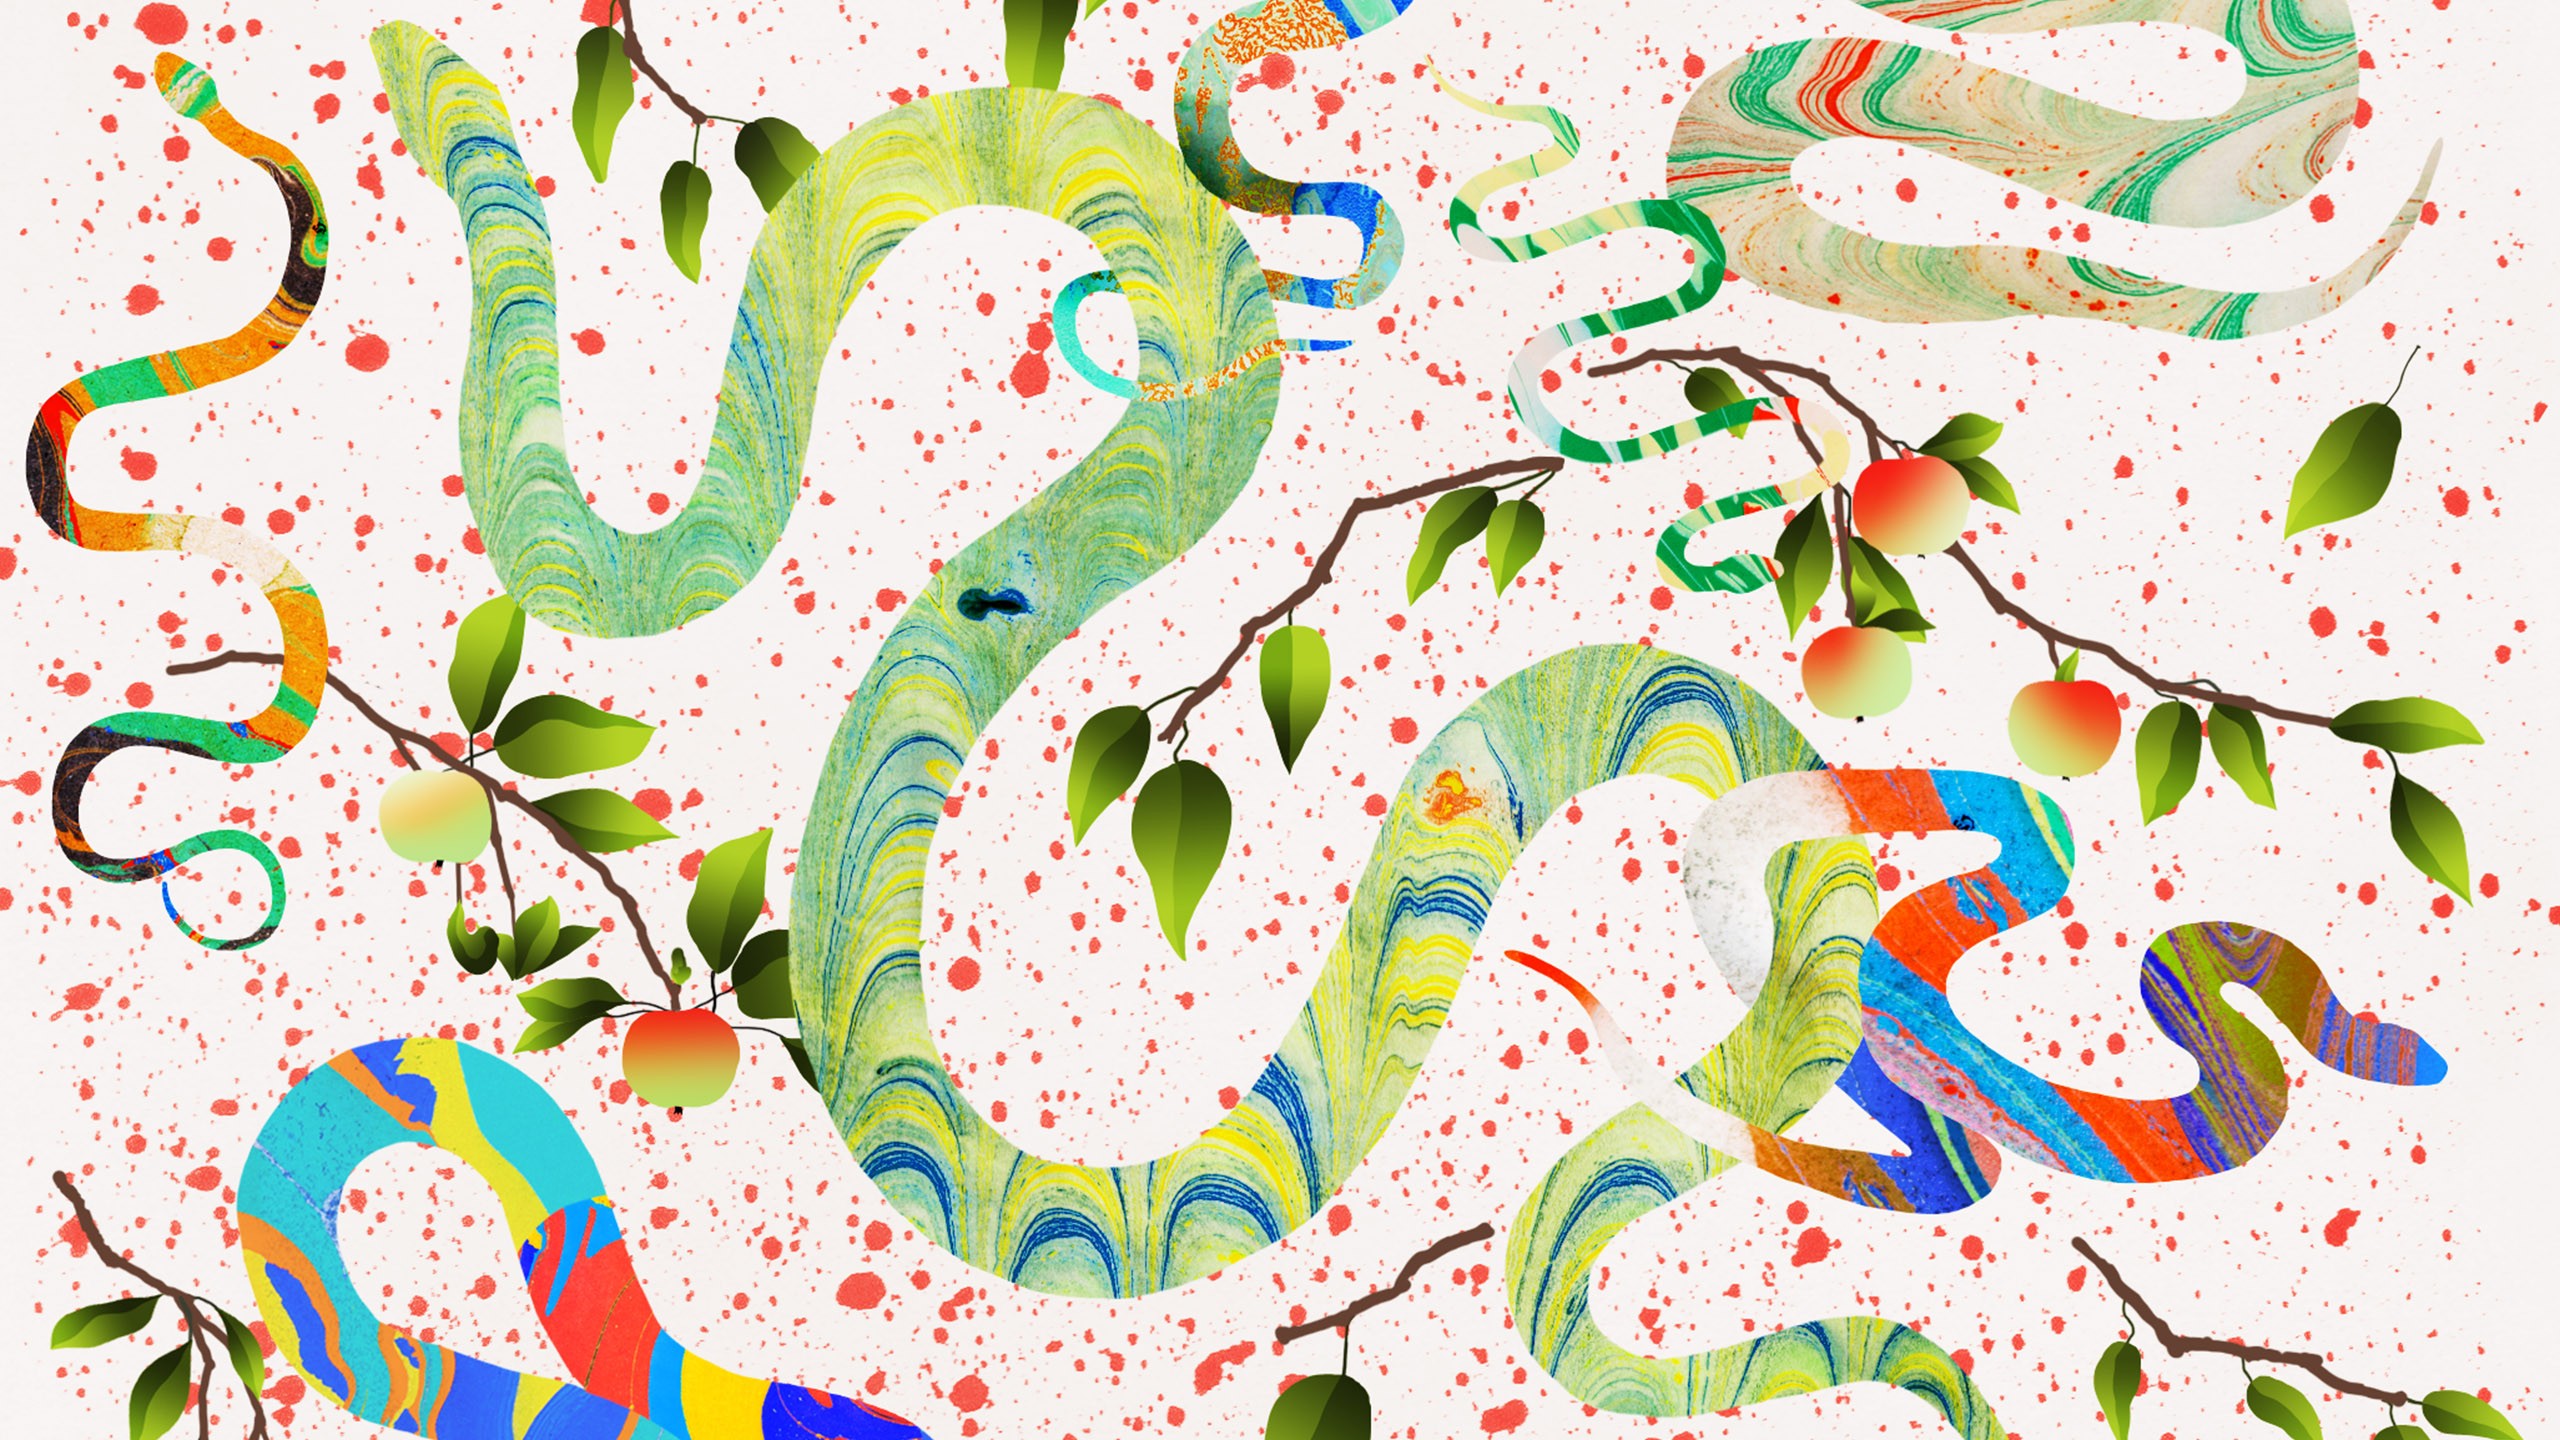 General 2560x1440 digital art abstract artwork animals snake branch leaves paint splatter white background fruit apples colorful